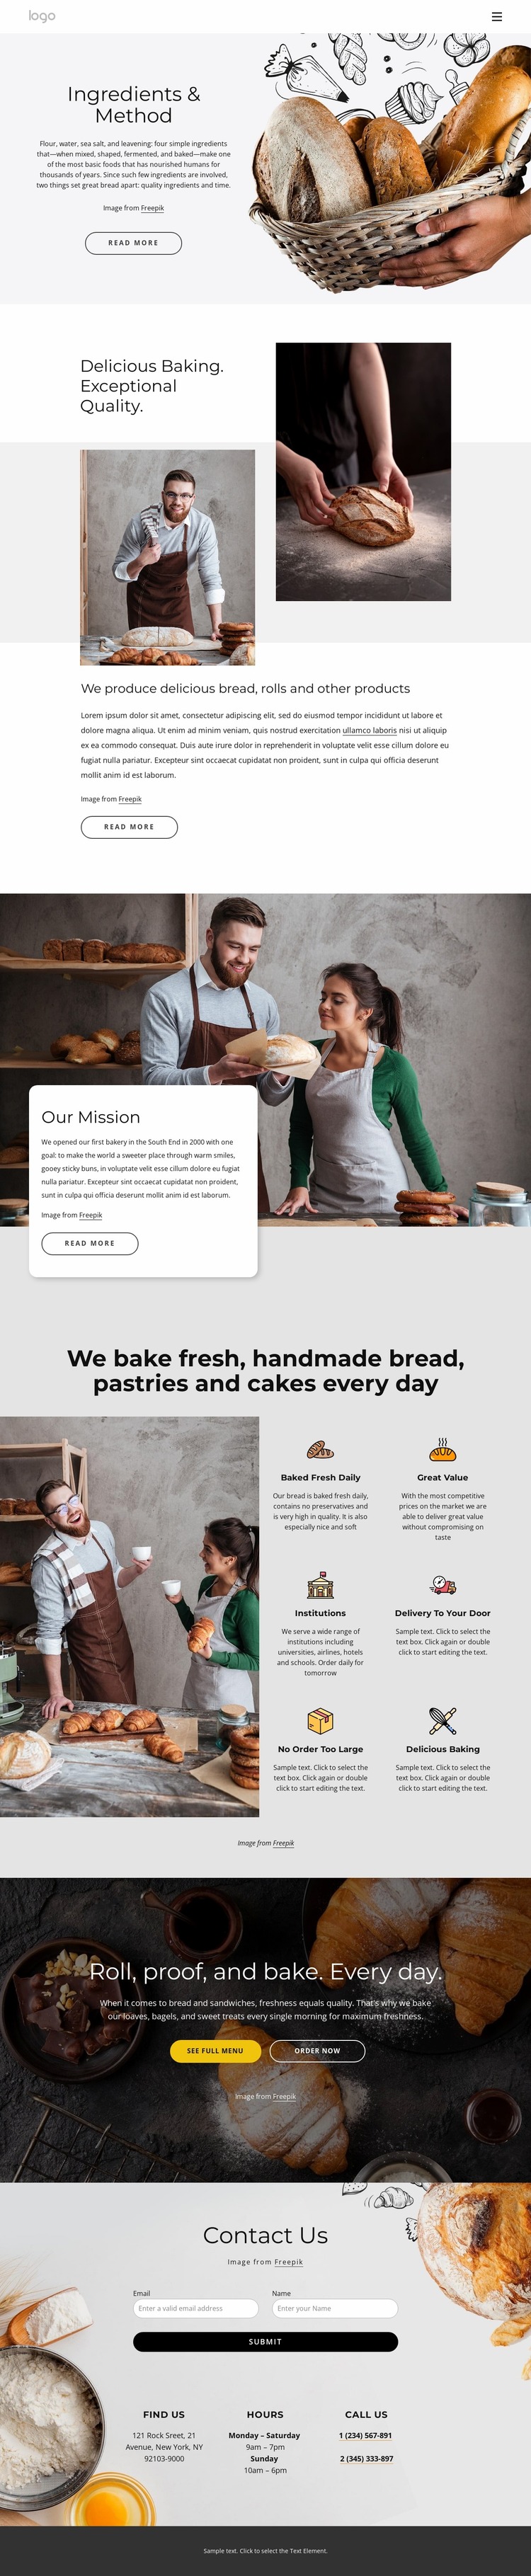 We bake handmade bread Website Mockup